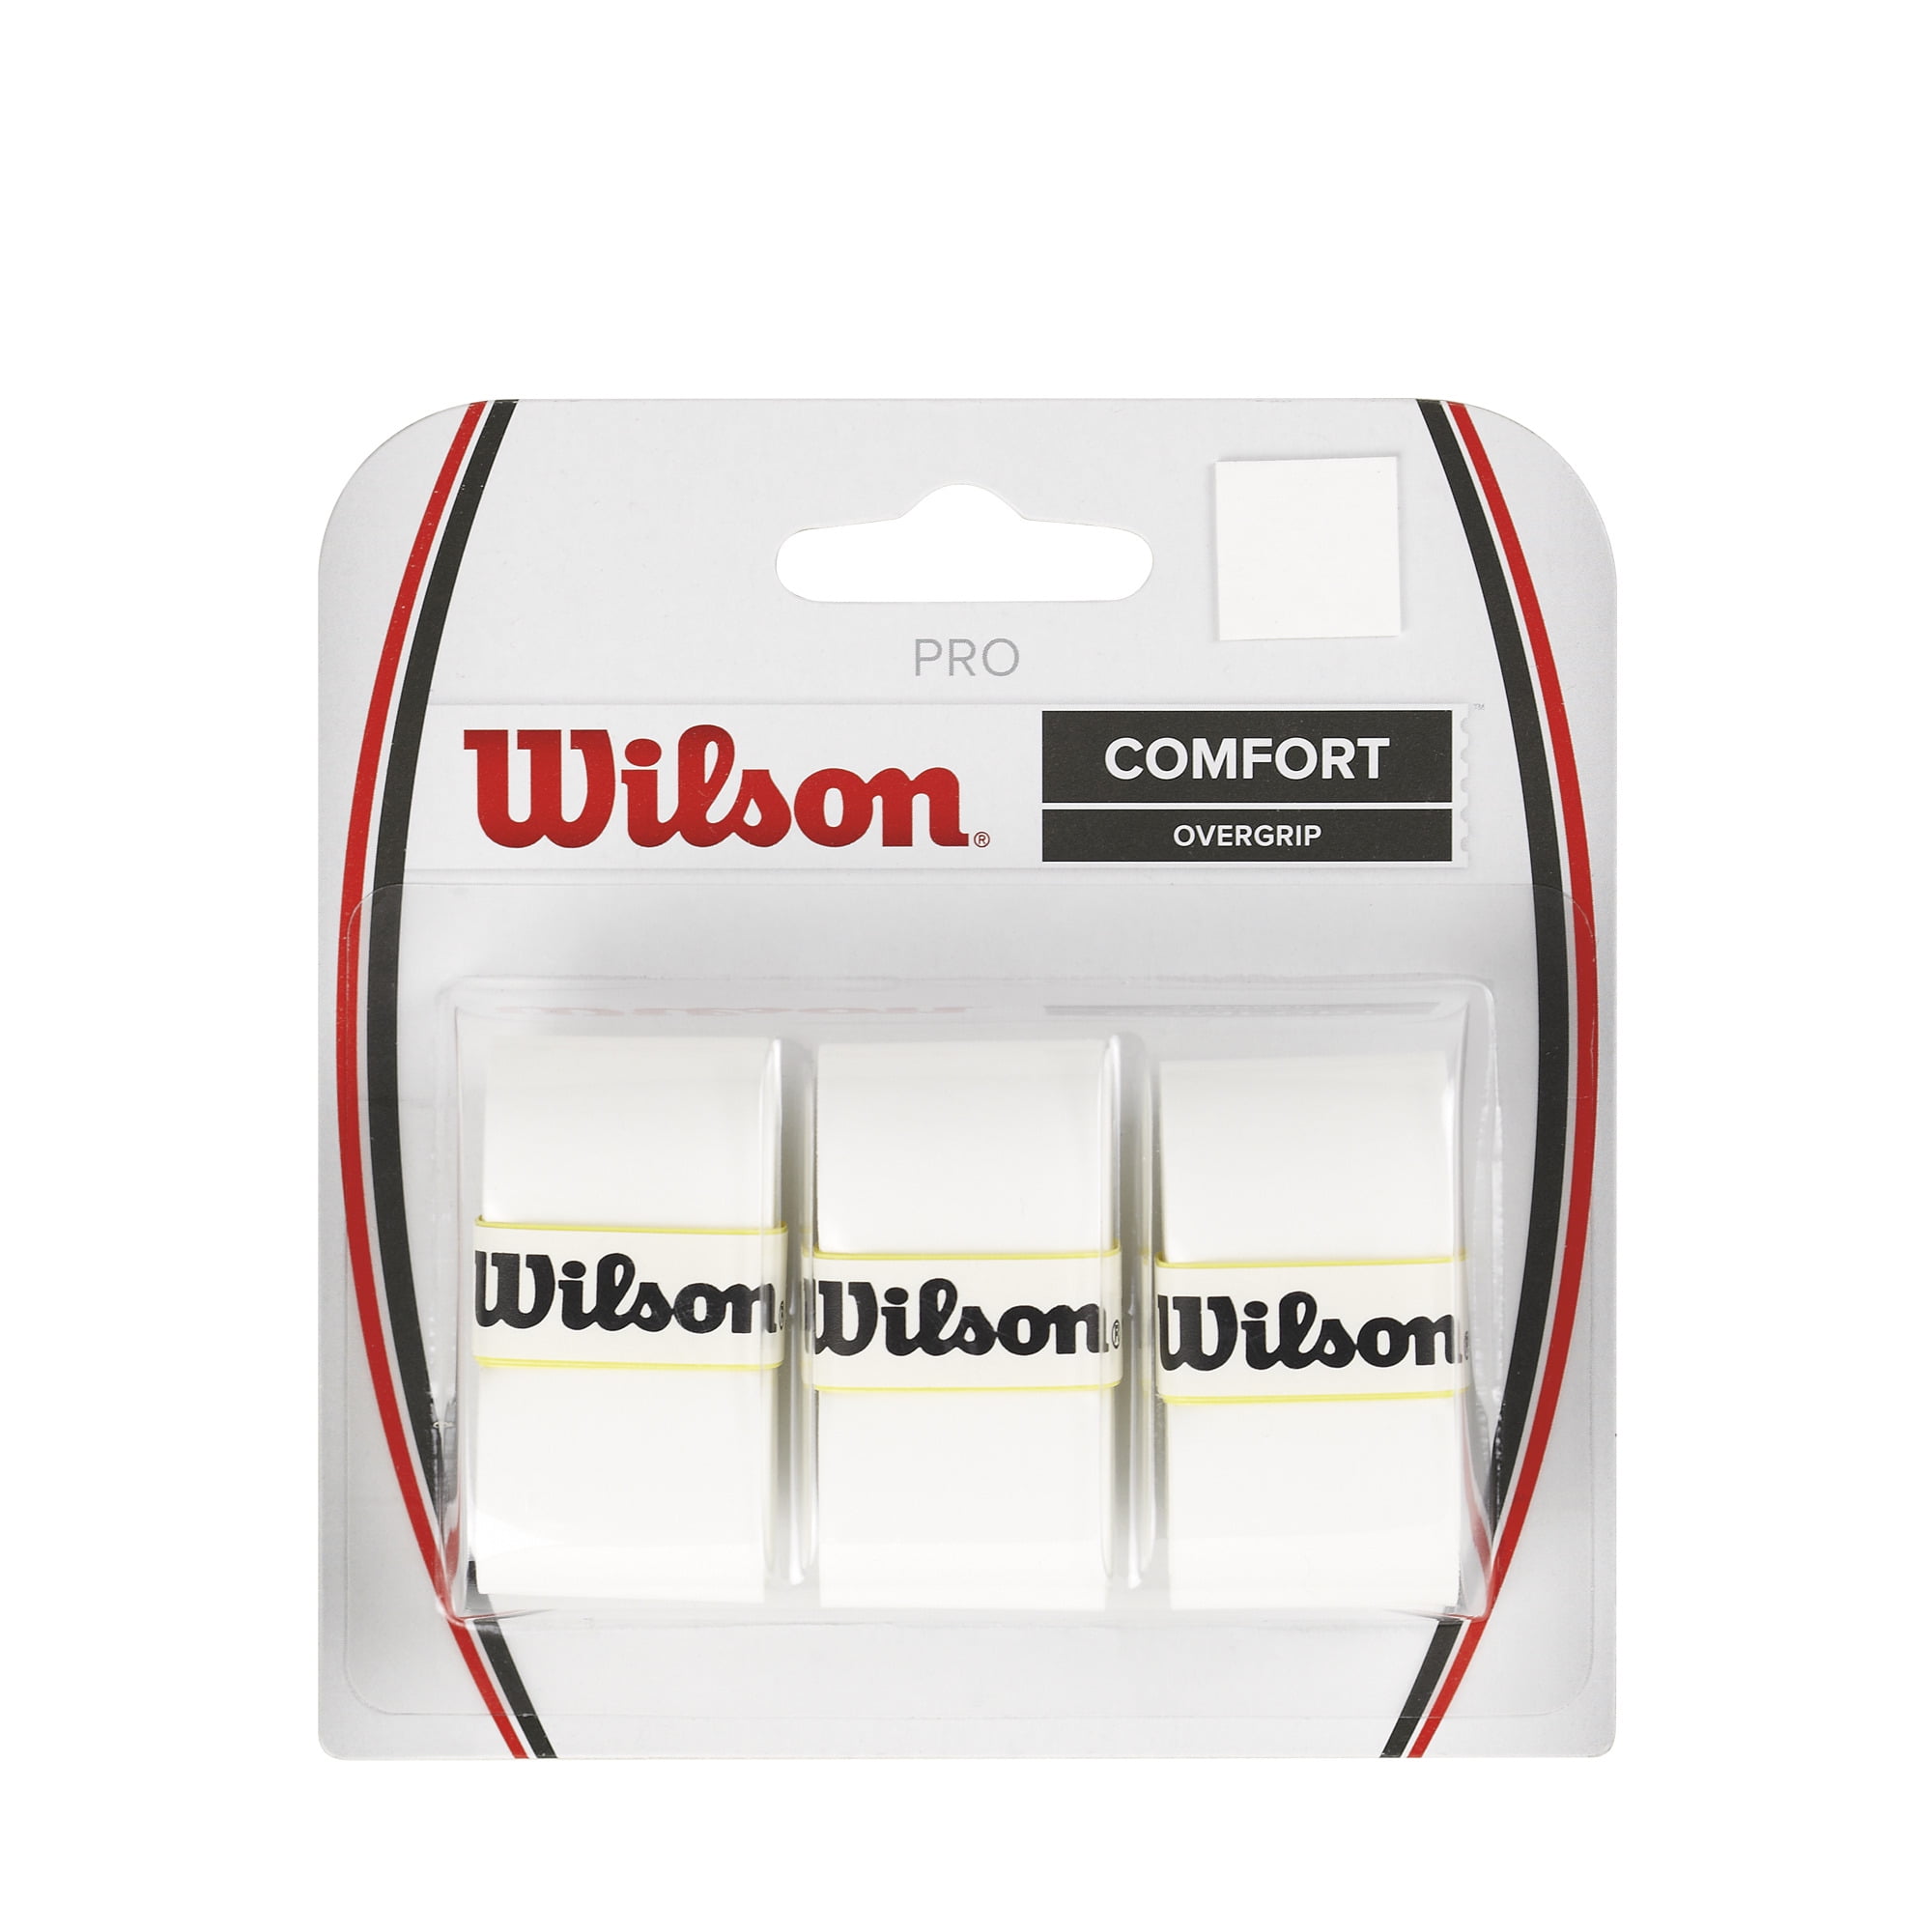 Wilson Ultra Wrap Black Comfort Overgrip Tennis Racket 3 Pack Sporting NEW 